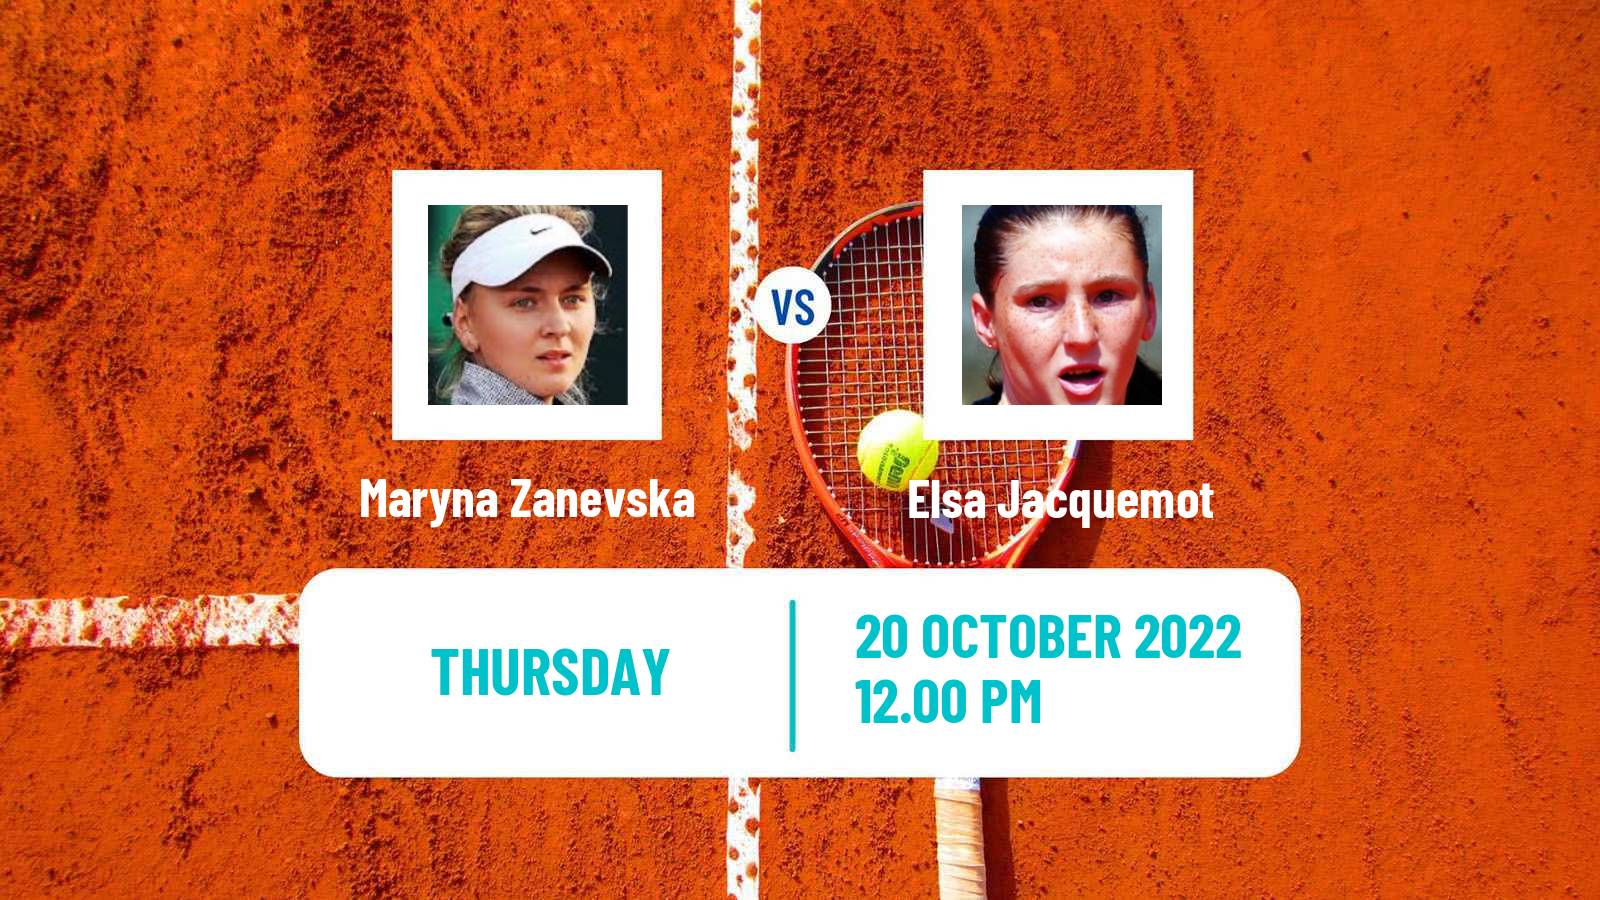 Tennis ATP Challenger Maryna Zanevska - Elsa Jacquemot